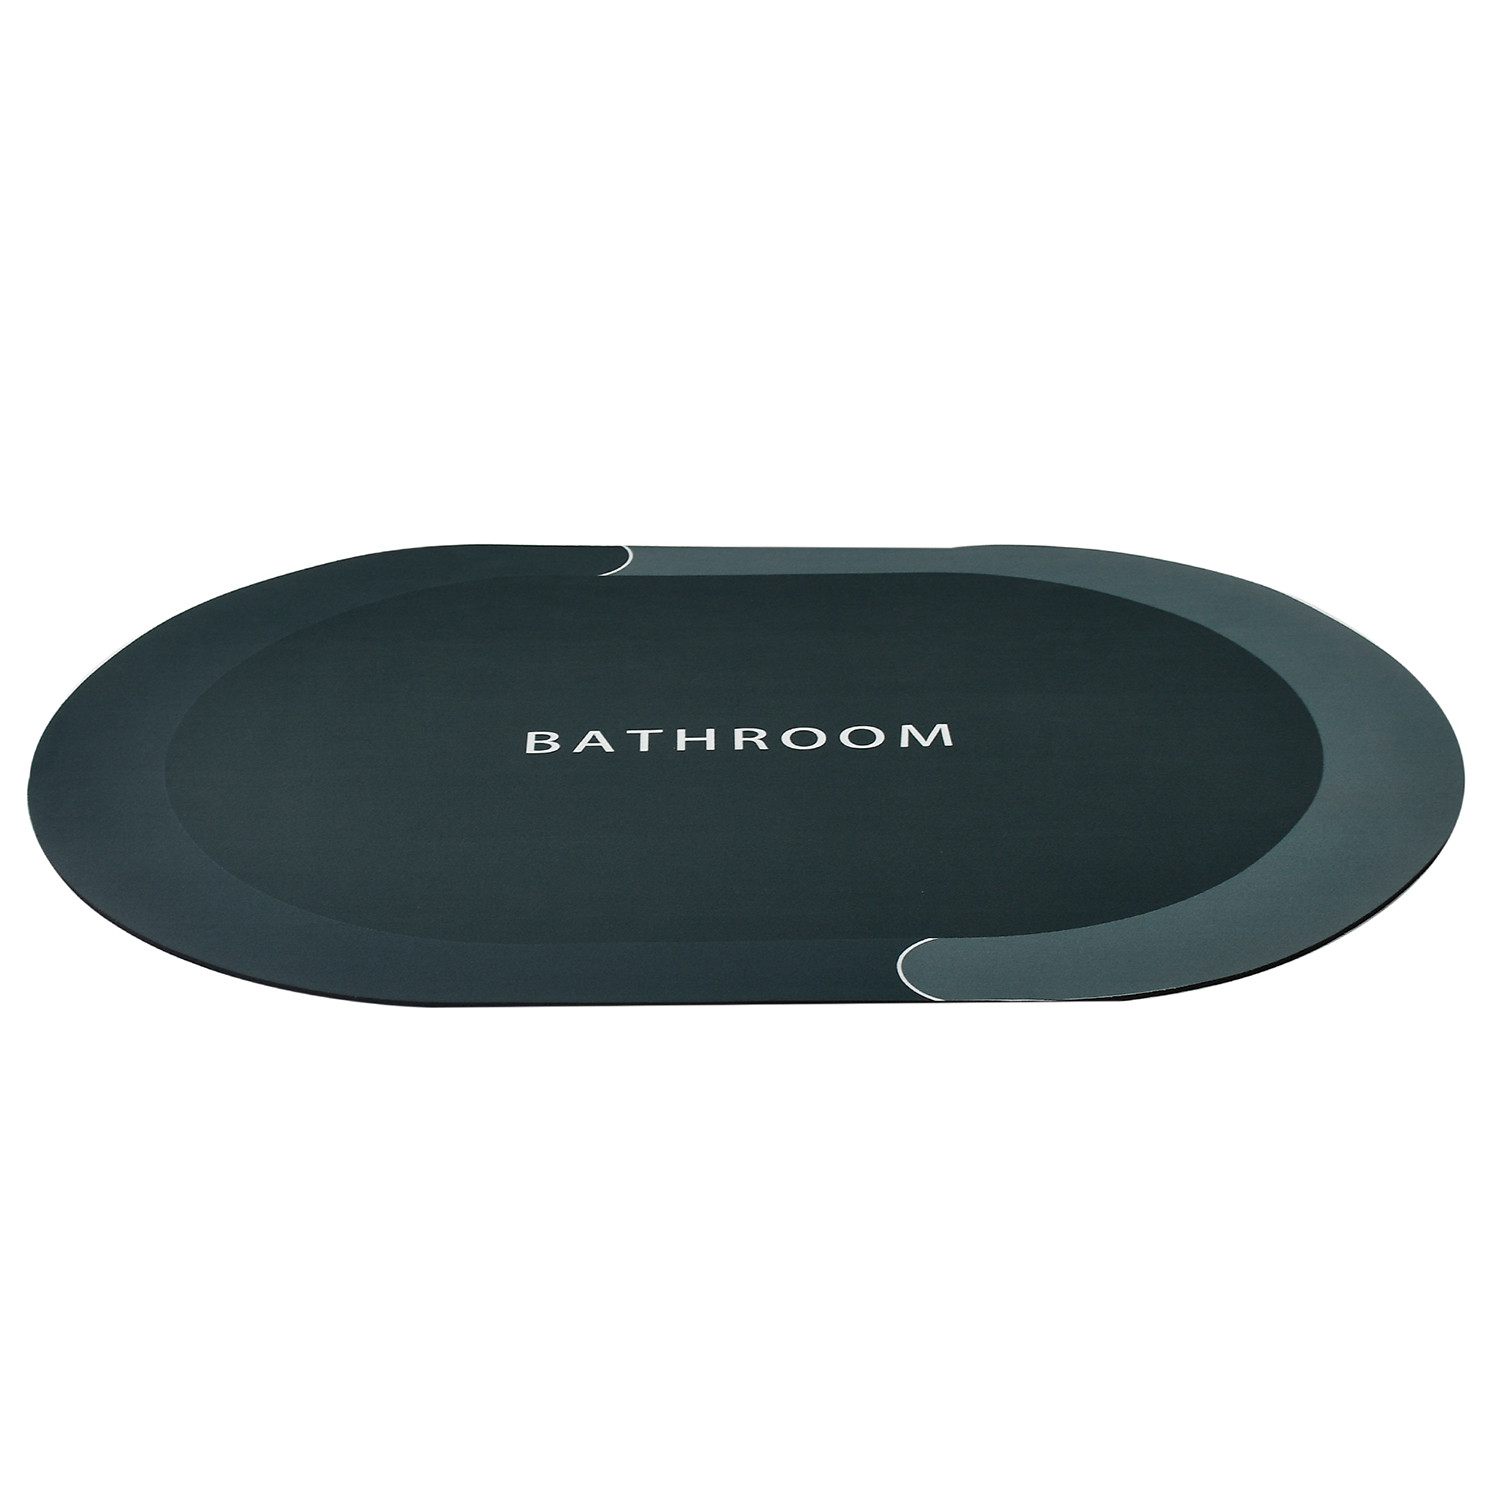 Kuber Industries Bathroom mat|Bathroom mat Super Absorbent Floor mat|Anti-skid Bathroom mat|Memory Foam Bathroom Rug Mat|Pack of 2 (Beige & Green)